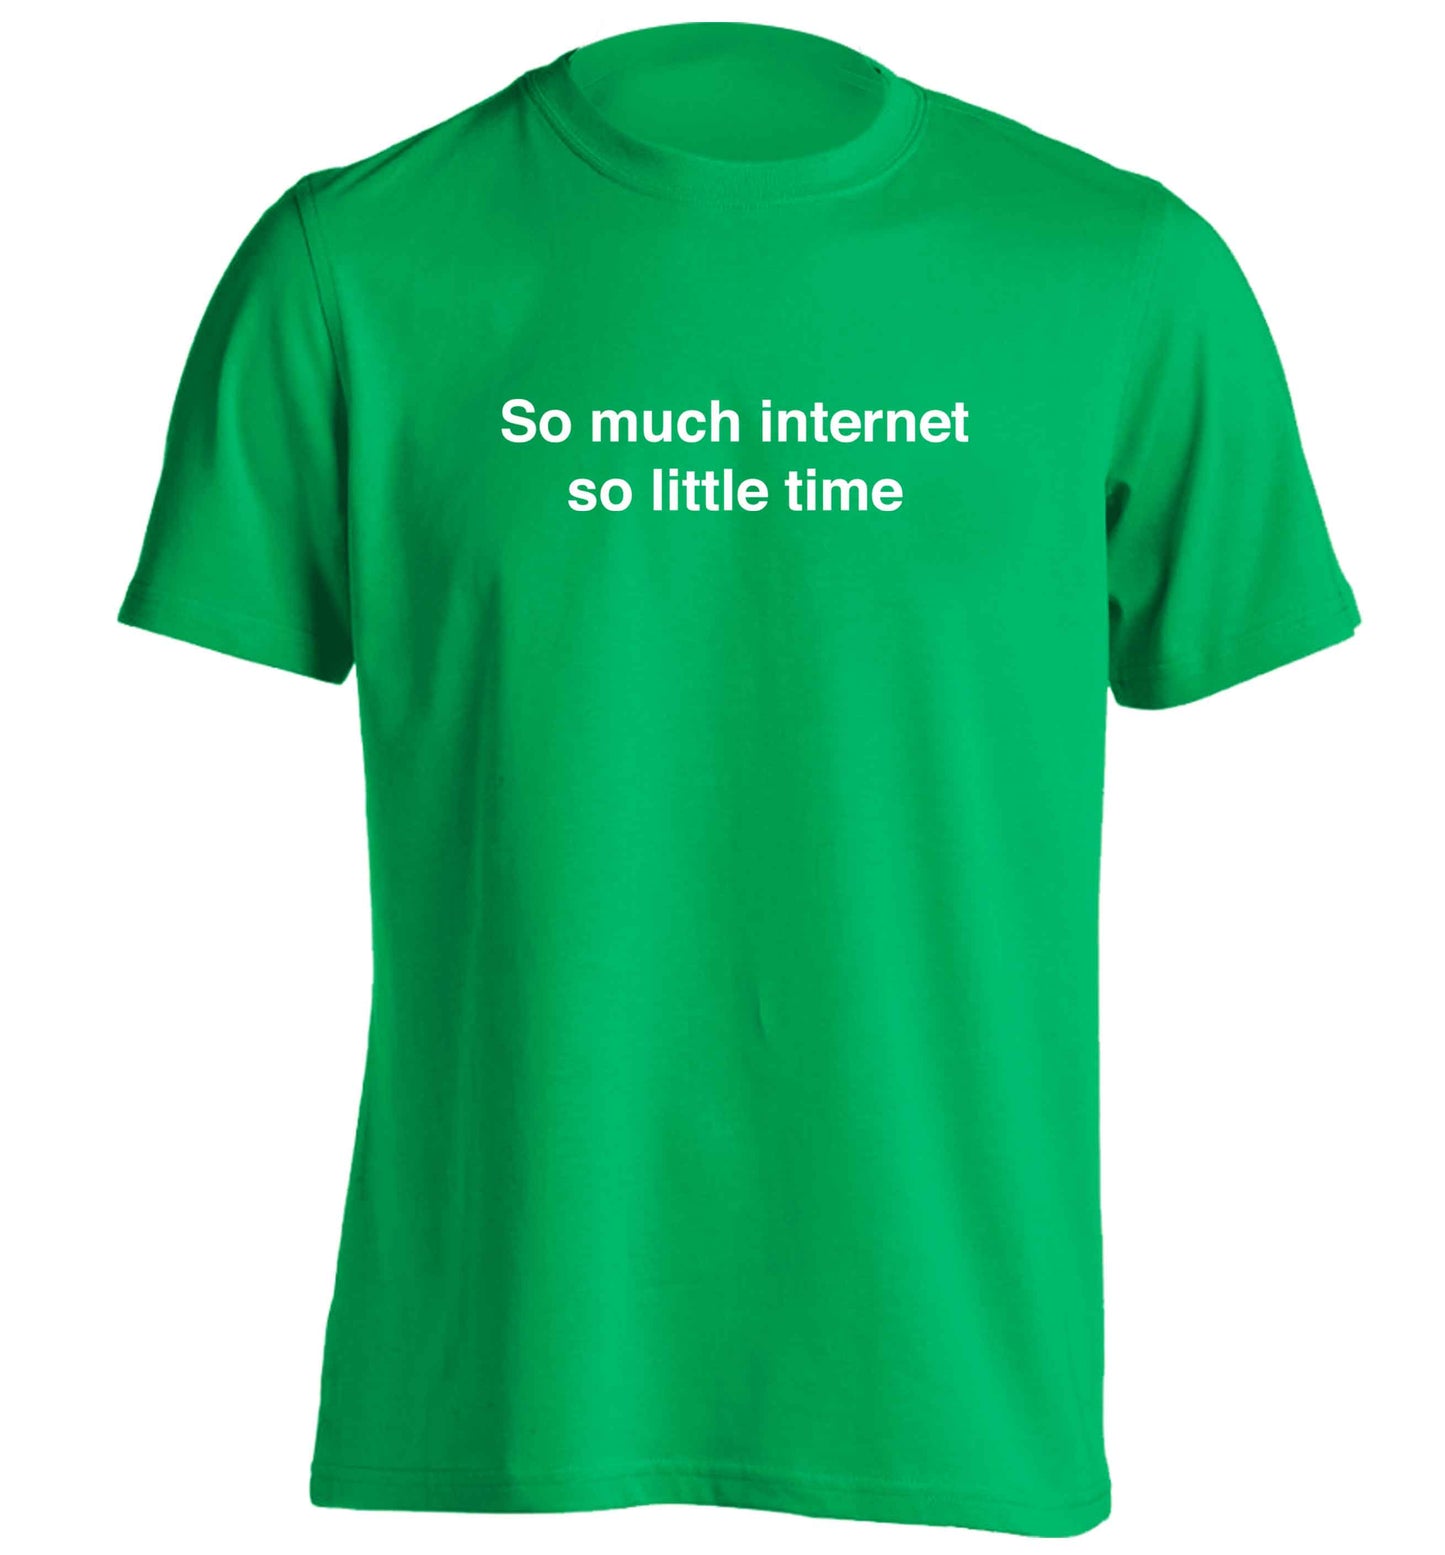 So much internet so little time adults unisex green Tshirt 2XL